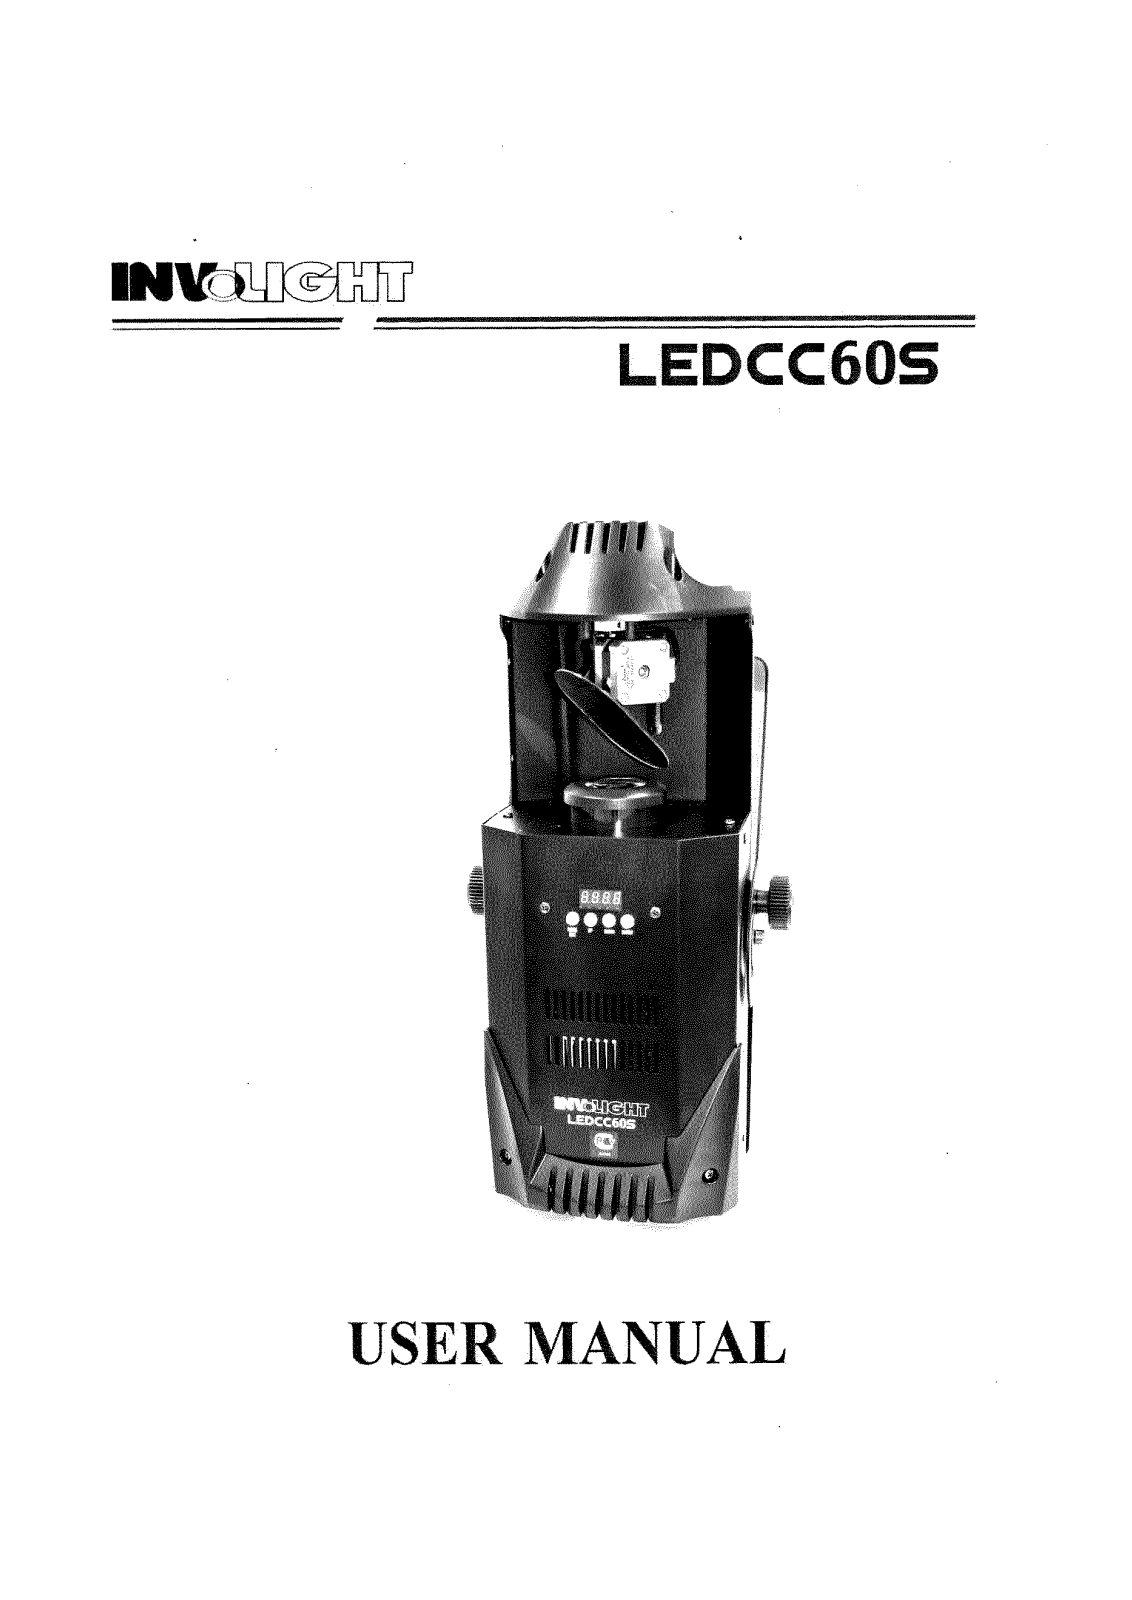 Involight LED CC60S User Manual